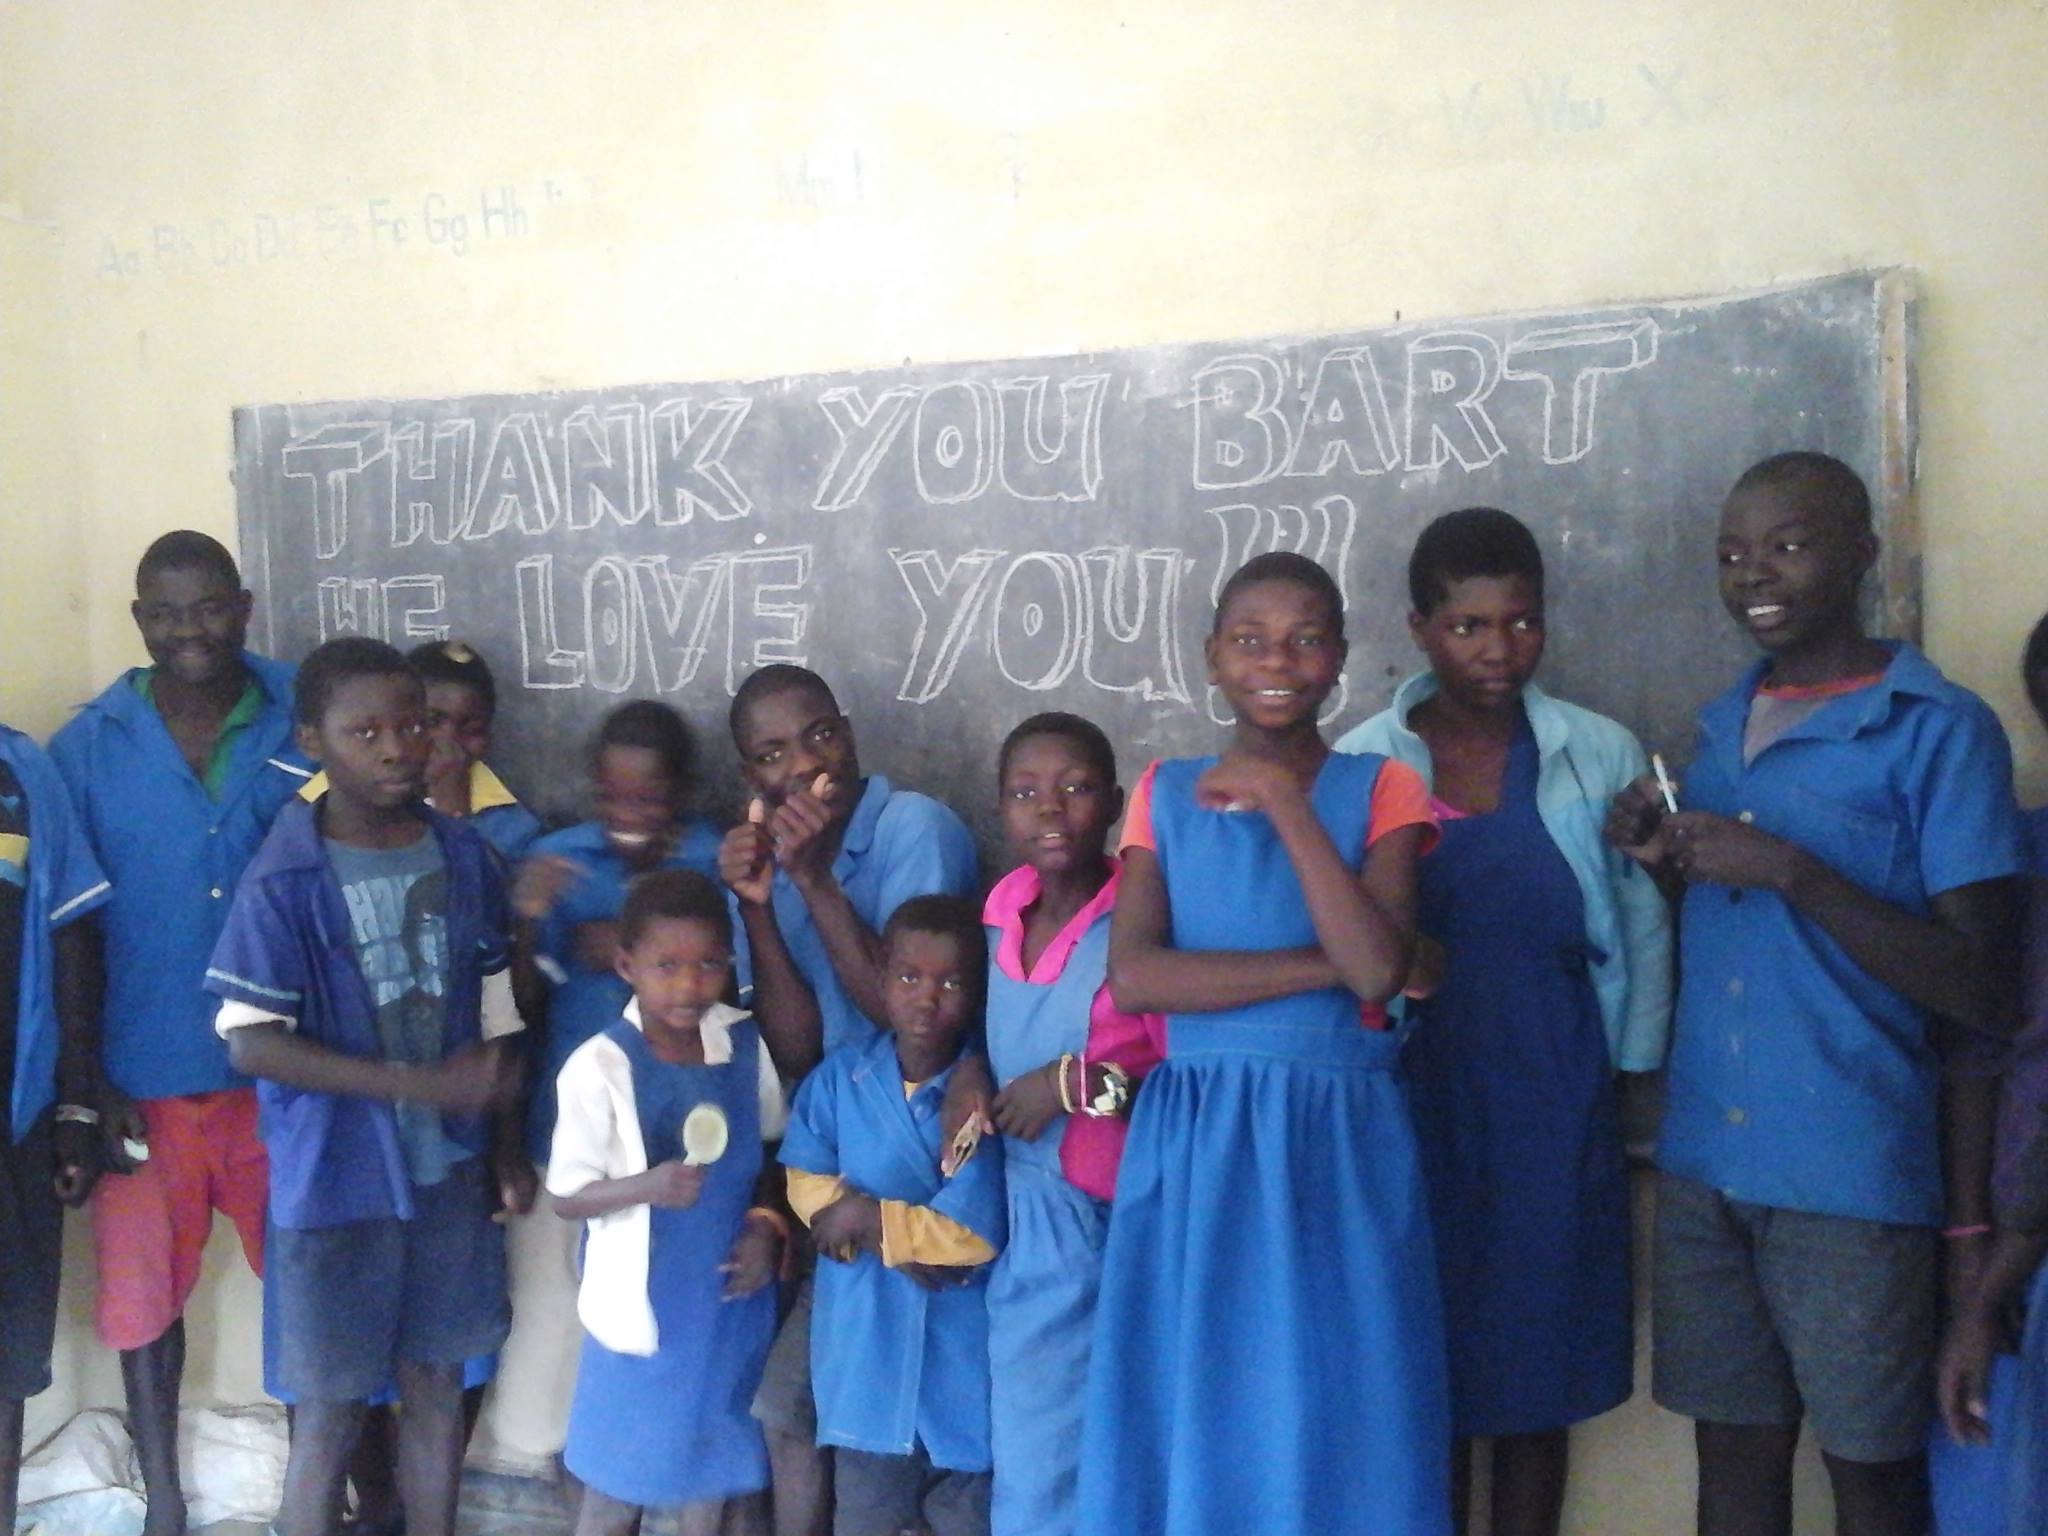 The students at Bandawe are thankful to Bart